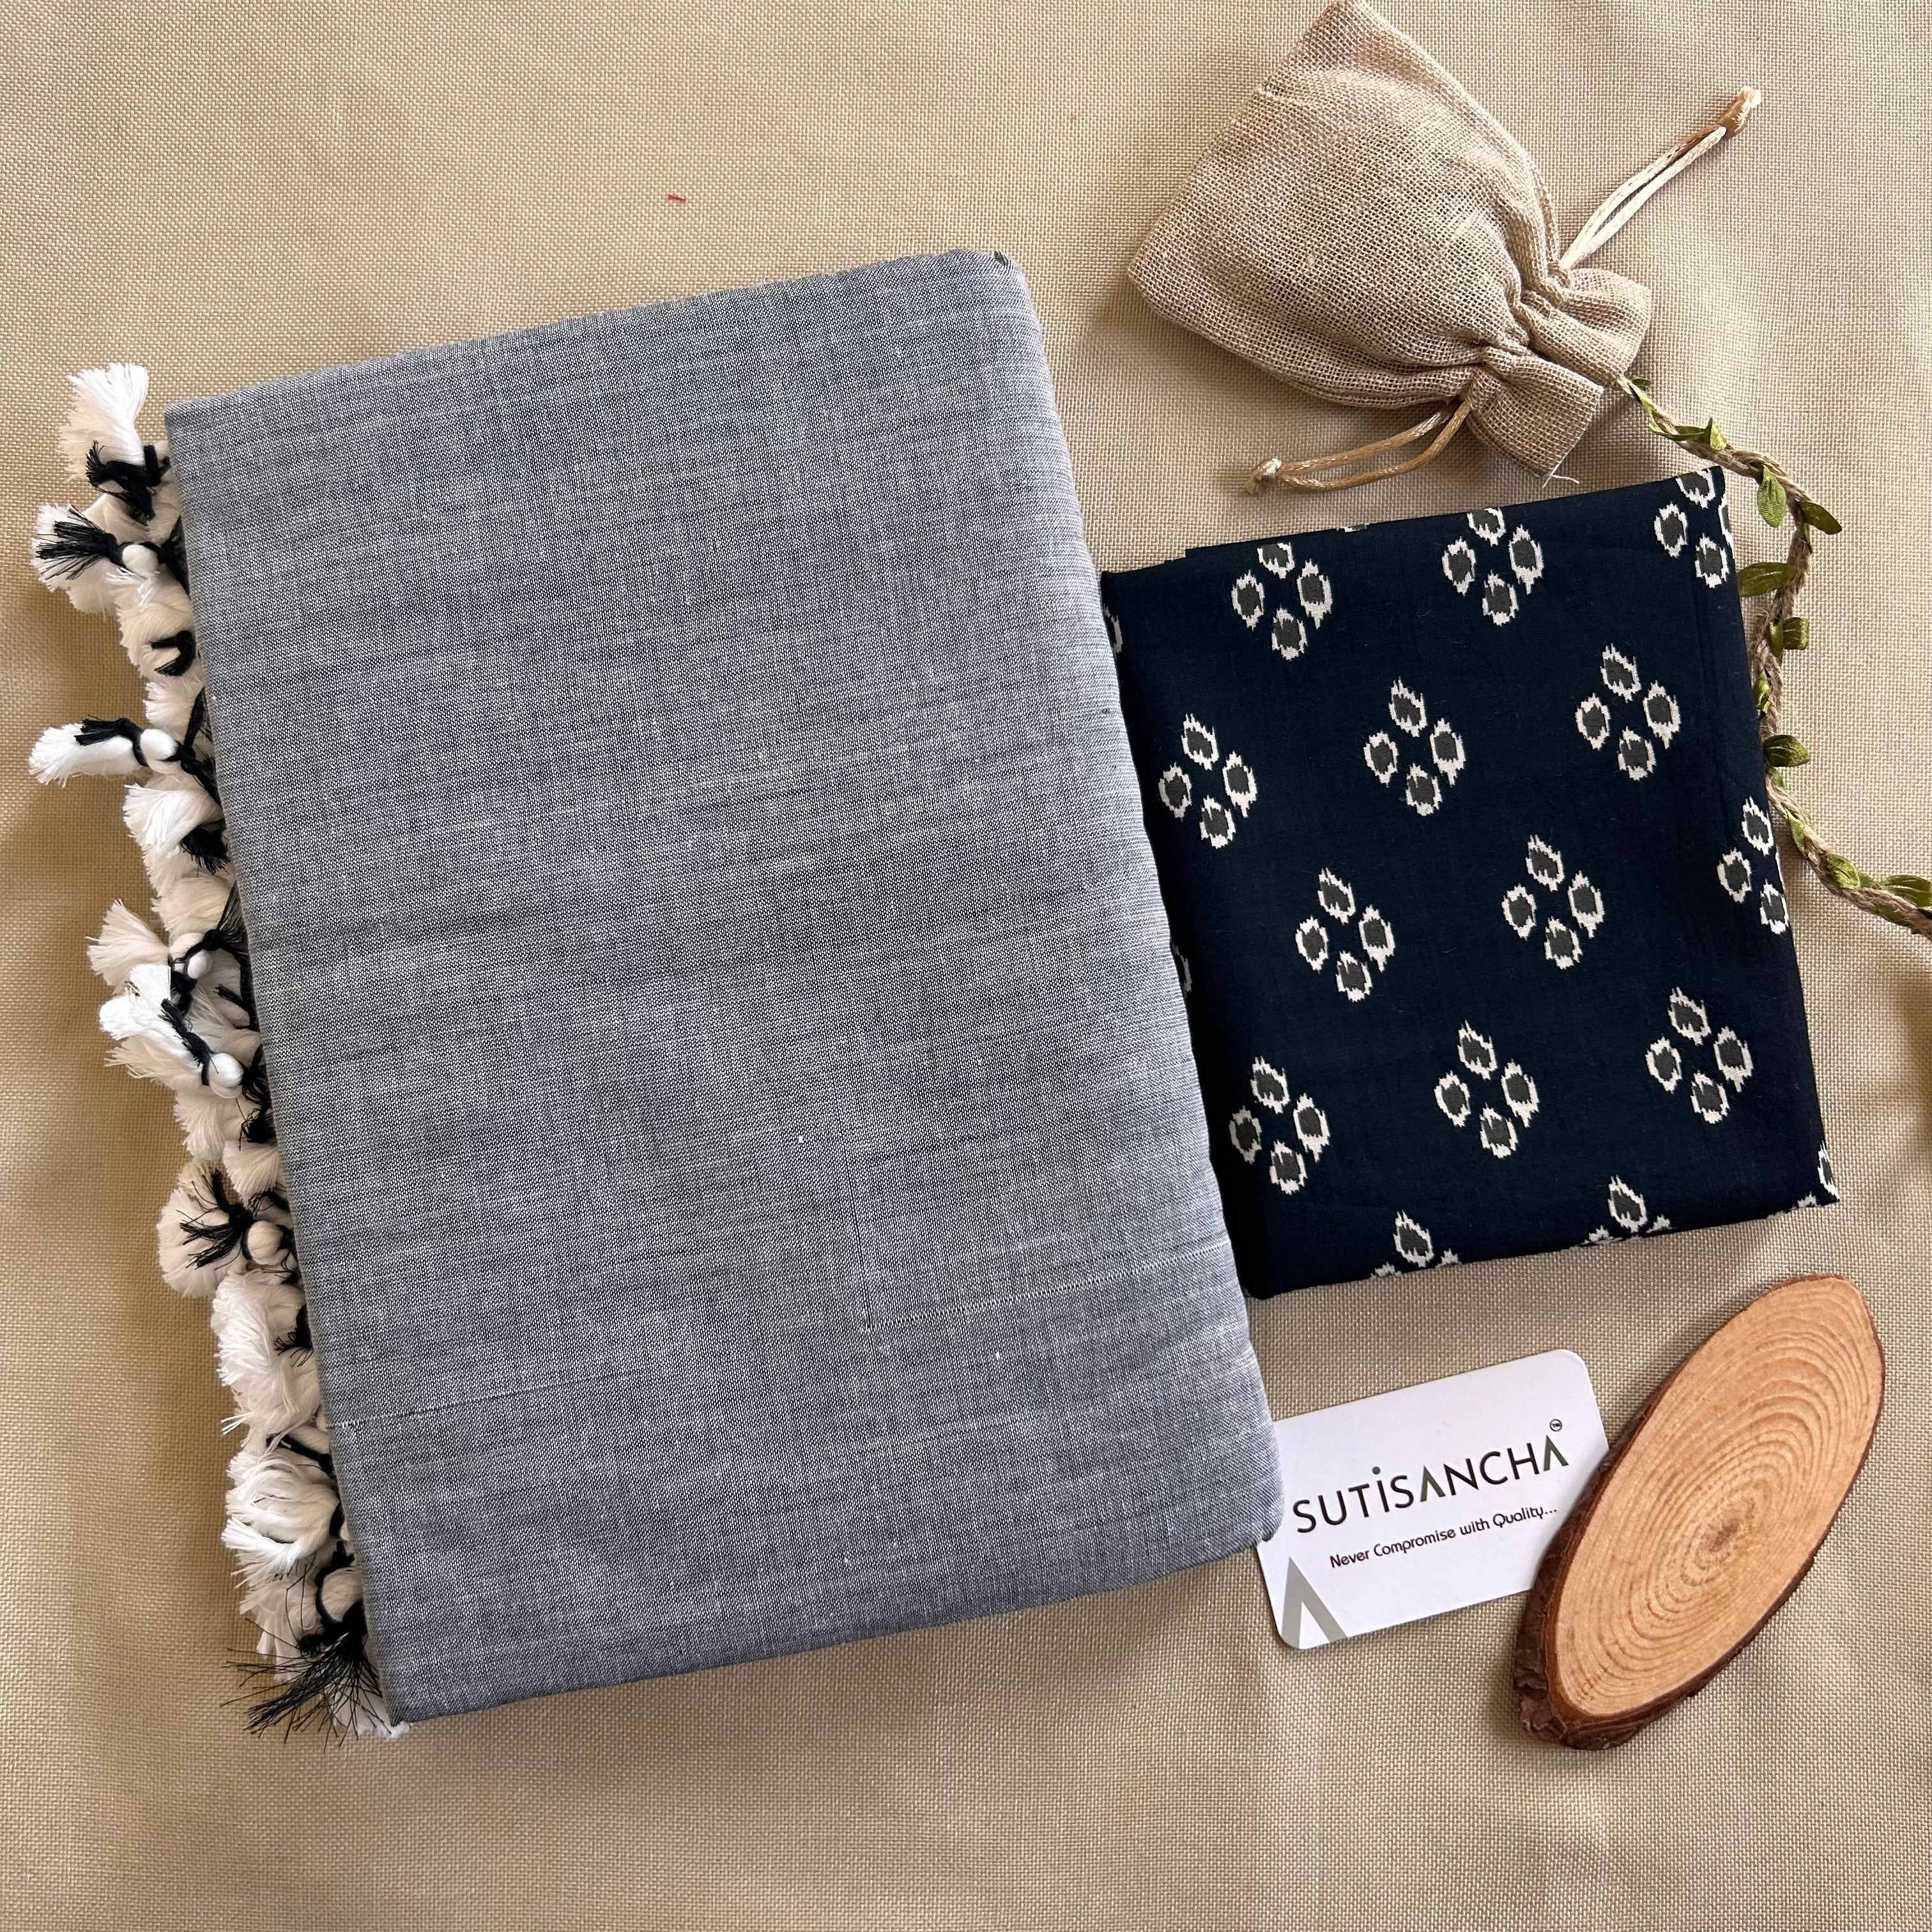 Sutisancha Grey Handloom Cotton Saree & Designer Blouse